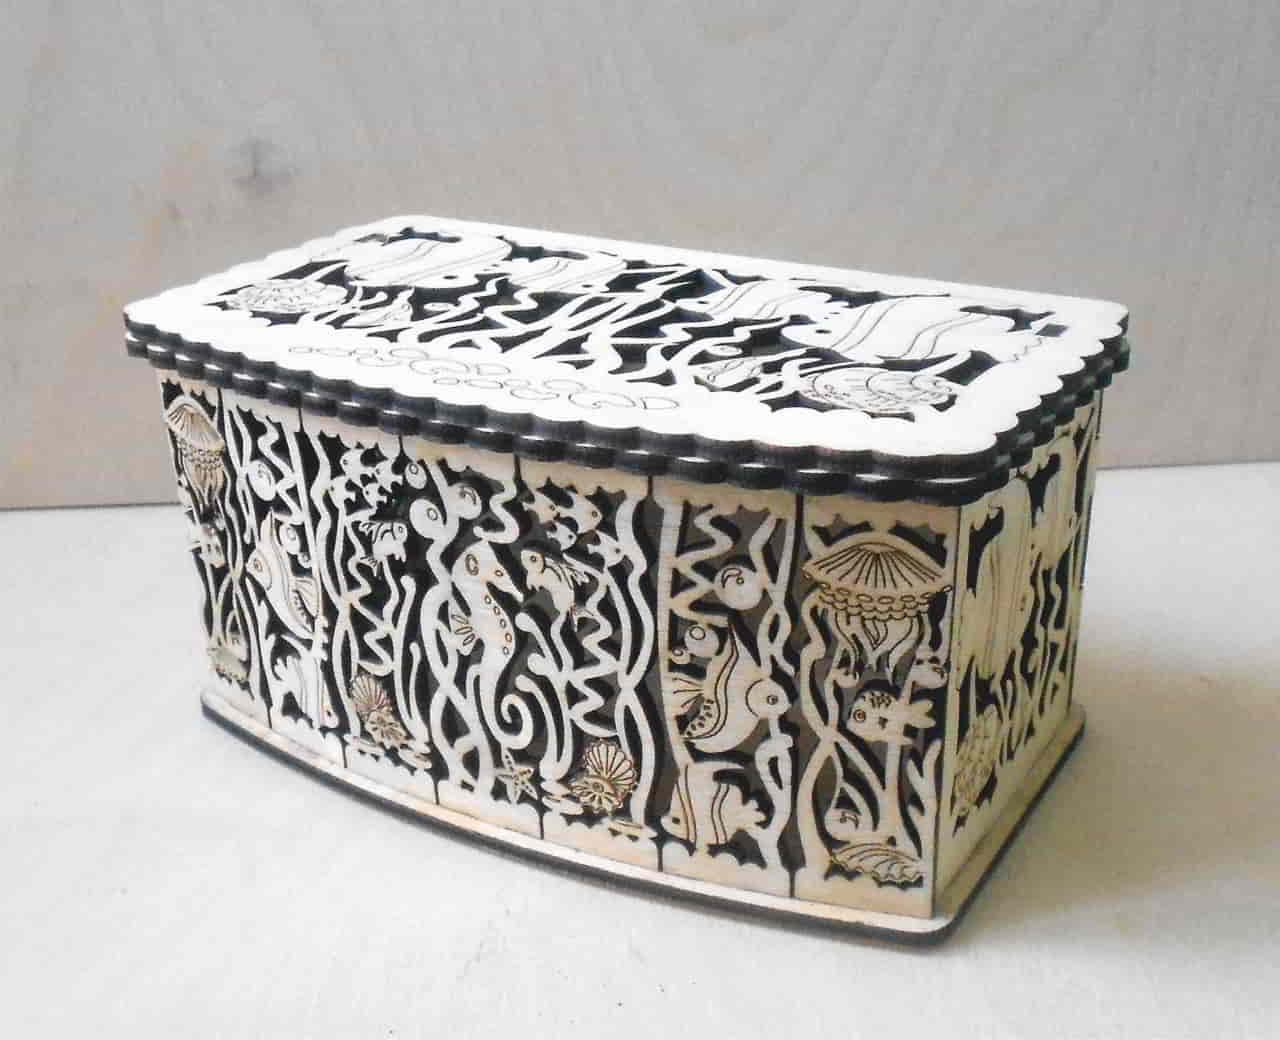 Laser Cut Wooden Engraving Box, Jewelry Box Design, Wedding Box Vector File